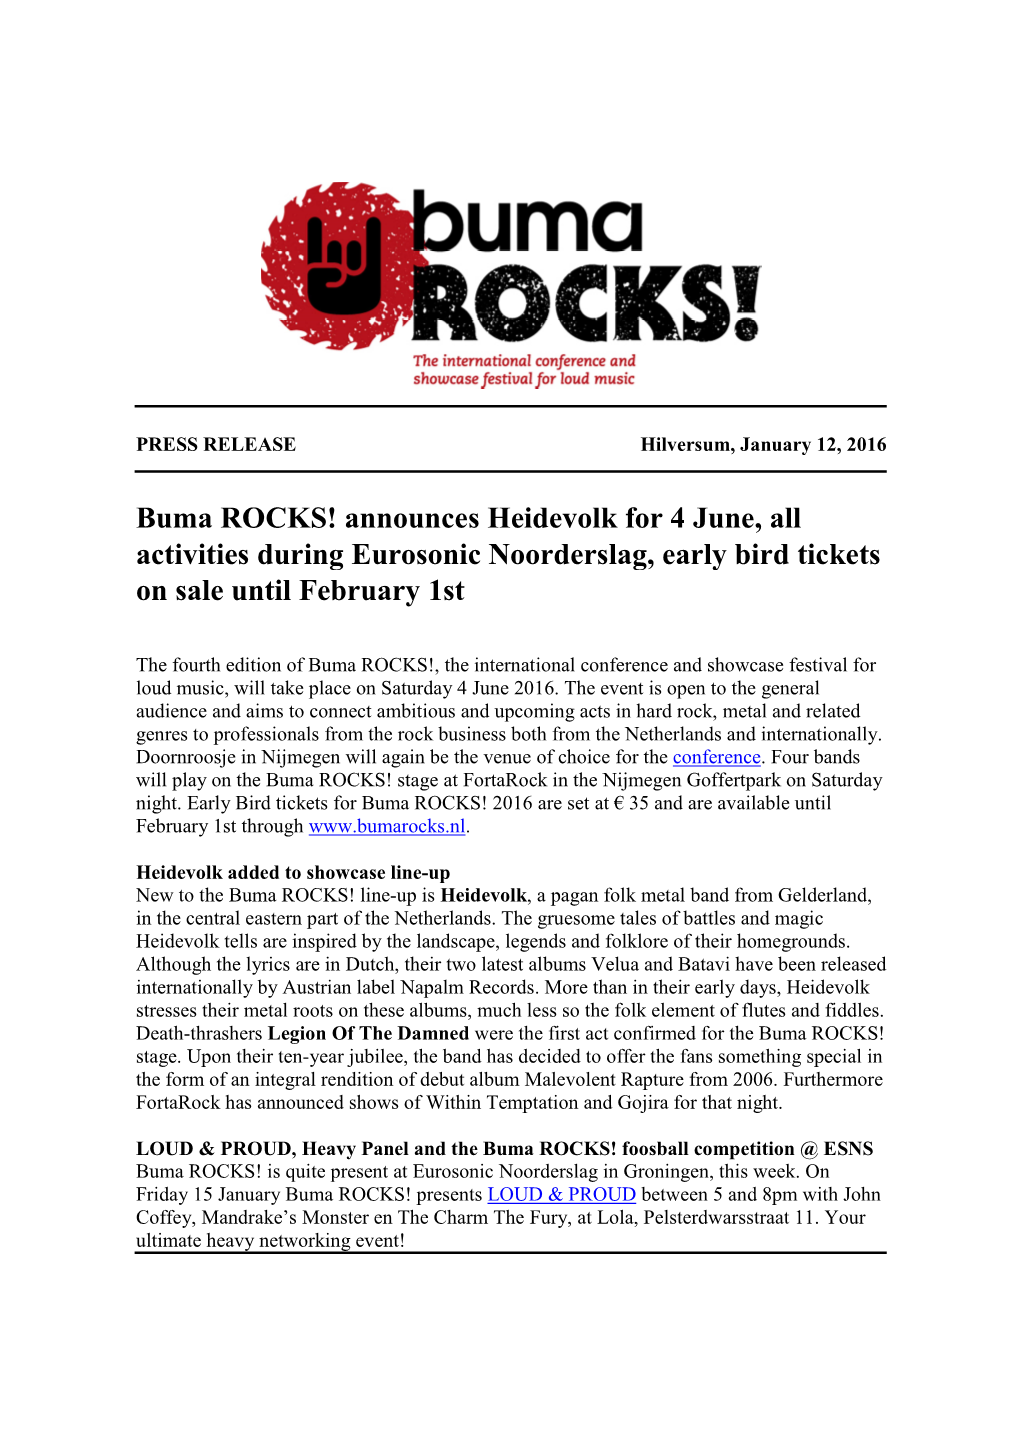 Buma ROCKS! Announces Heidevolk for 4 June, All Activities During Eurosonic Noorderslag, Early Bird Tickets on Sale Until February 1St